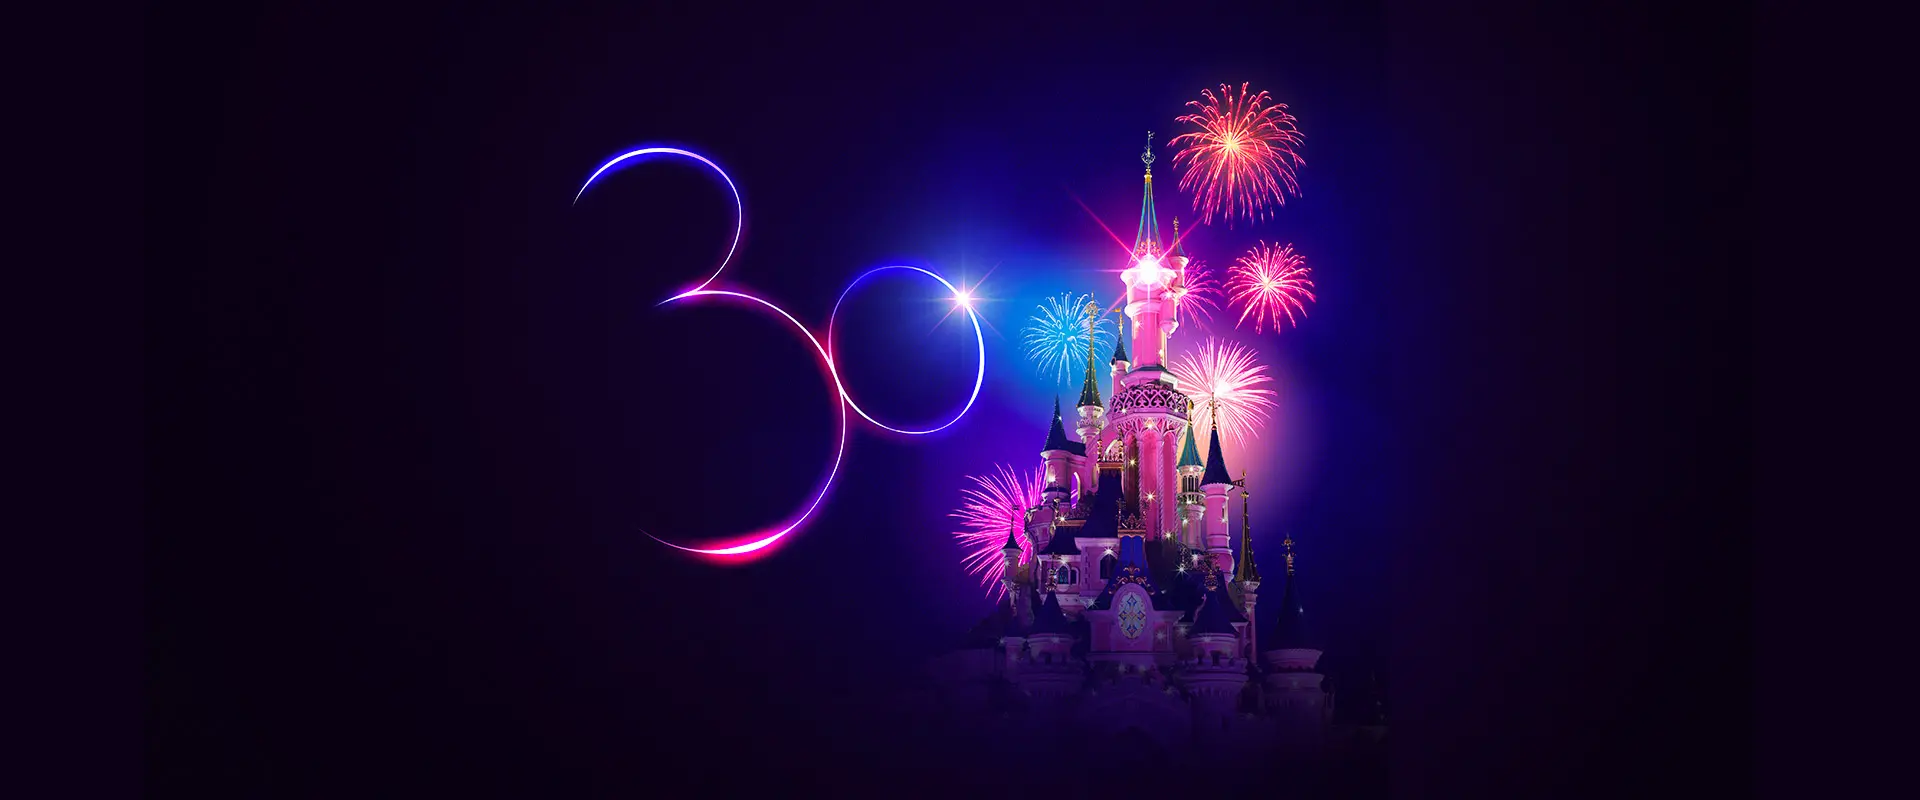 VIDEO: Disneyland Paris is Getting Ready to Celebrate 30 Years! 